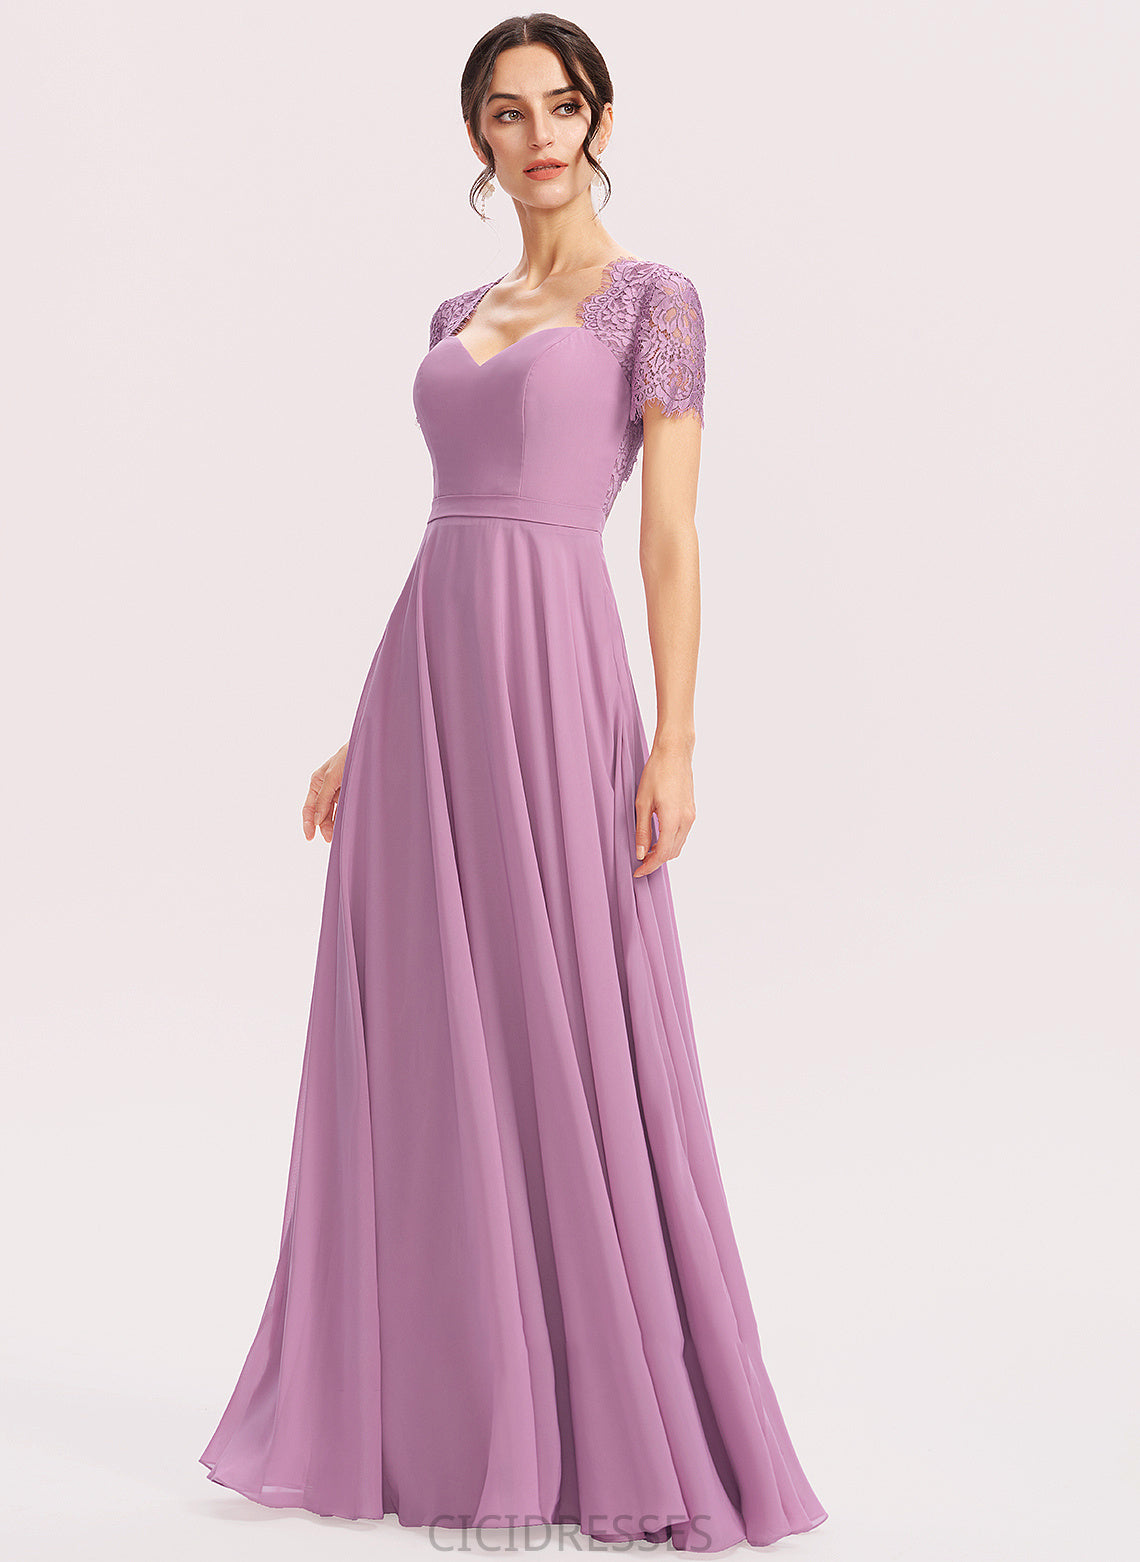 Sweetheart Neckline Silhouette Embellishment Lace A-Line Straps Fabric Carleigh Floor Length Natural Waist Halter Bridesmaid Dresses